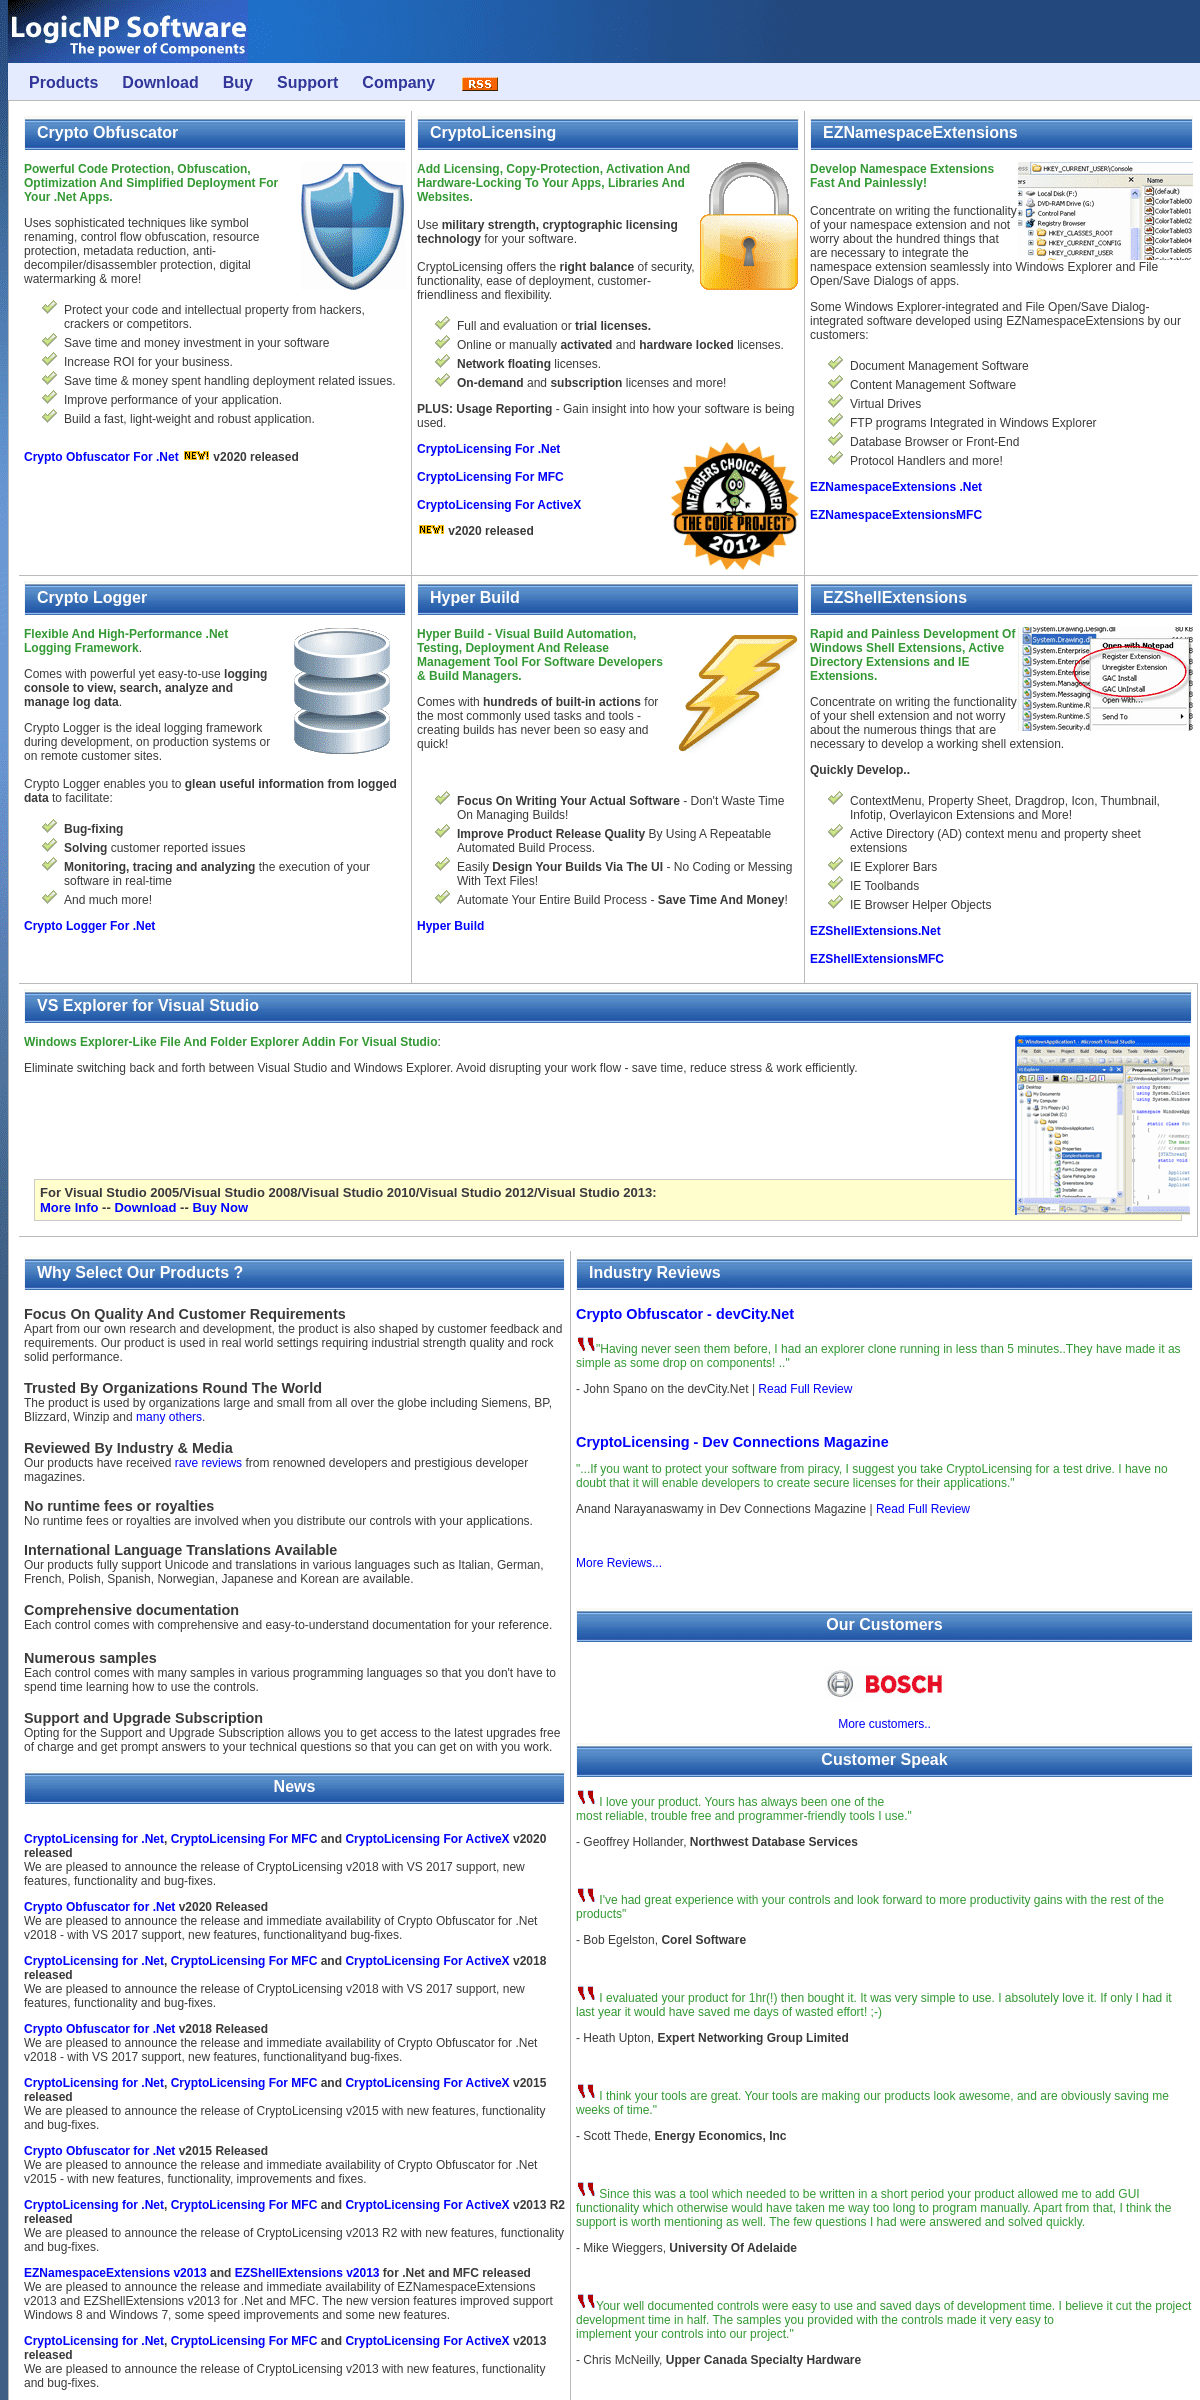 A complete backup of ssware.com